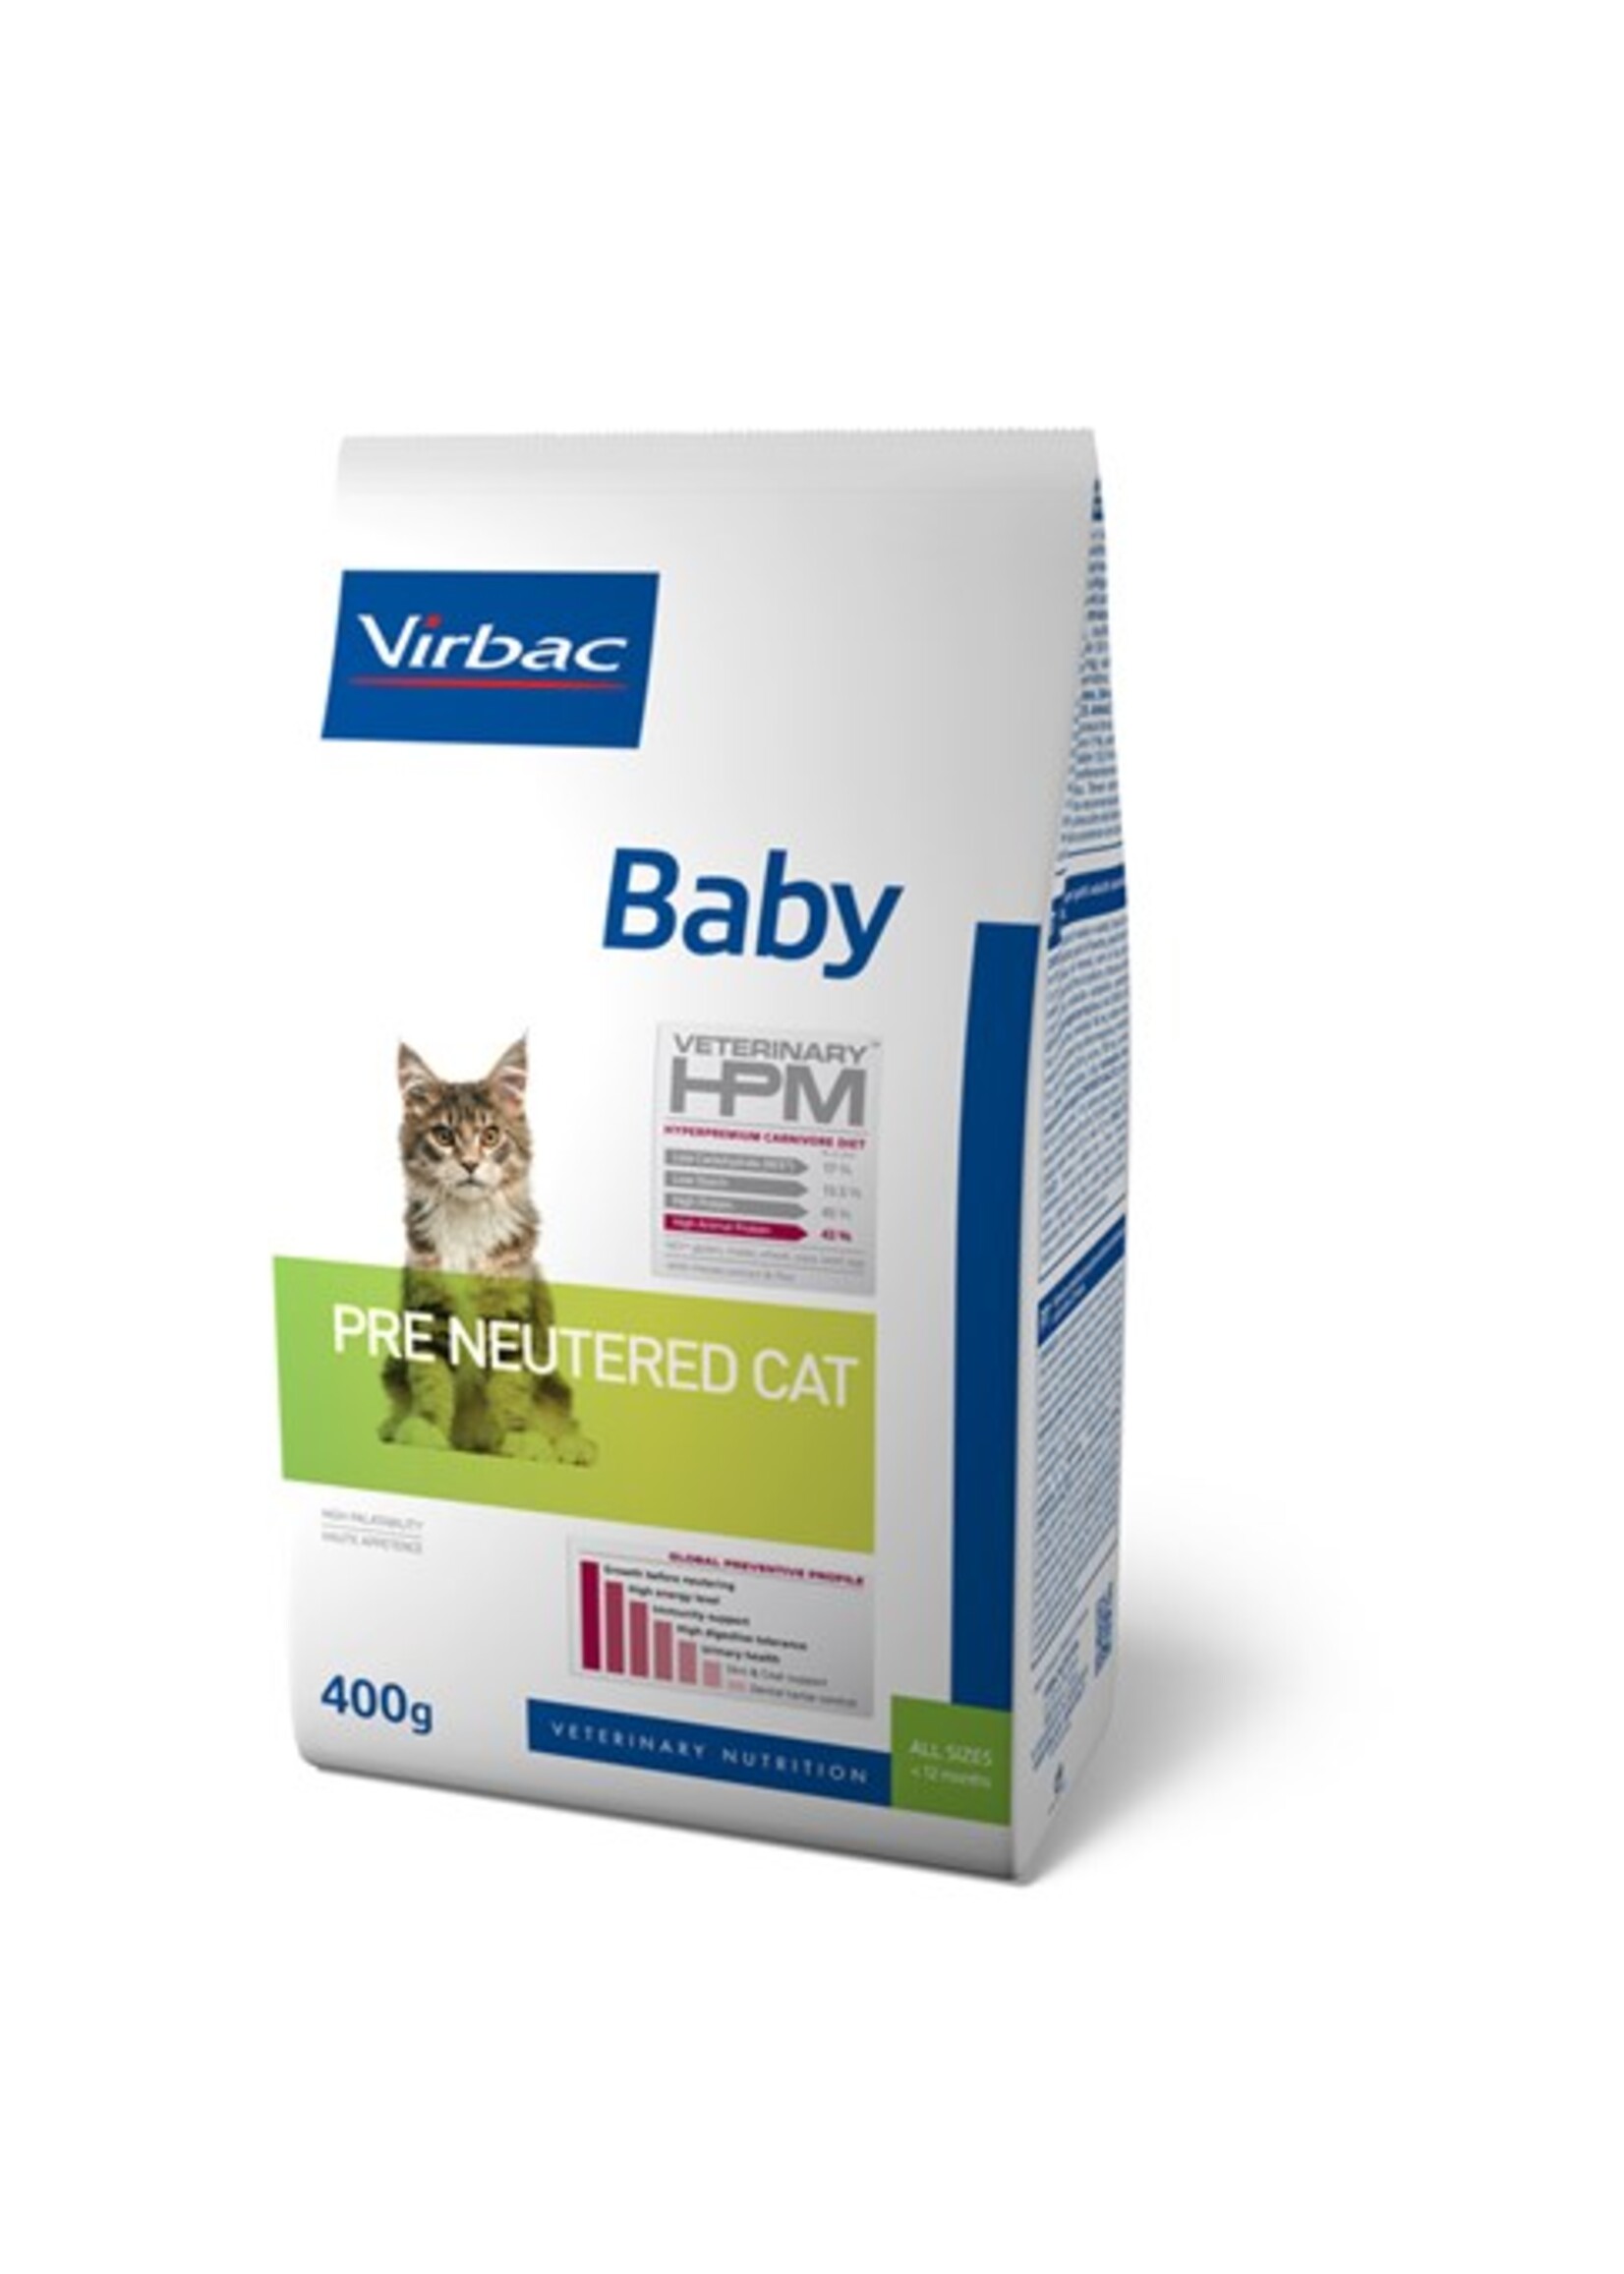 Virbac Virbac Hpm Chat Pre Neutered Baby 0,4kg